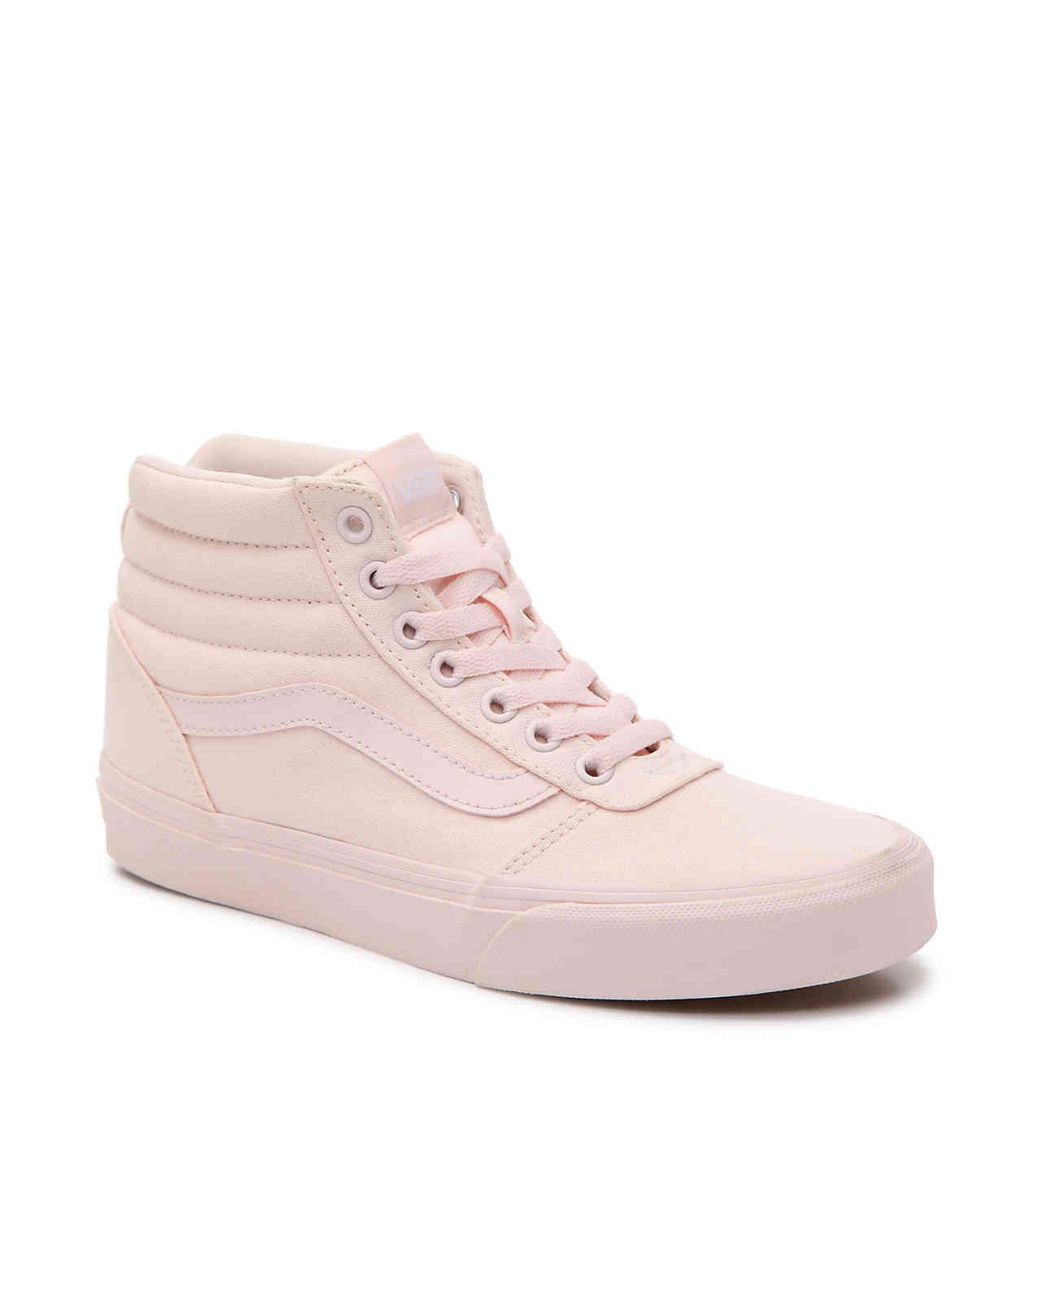 Vans Ward Hi High-top Sneaker in Pink | Lyst